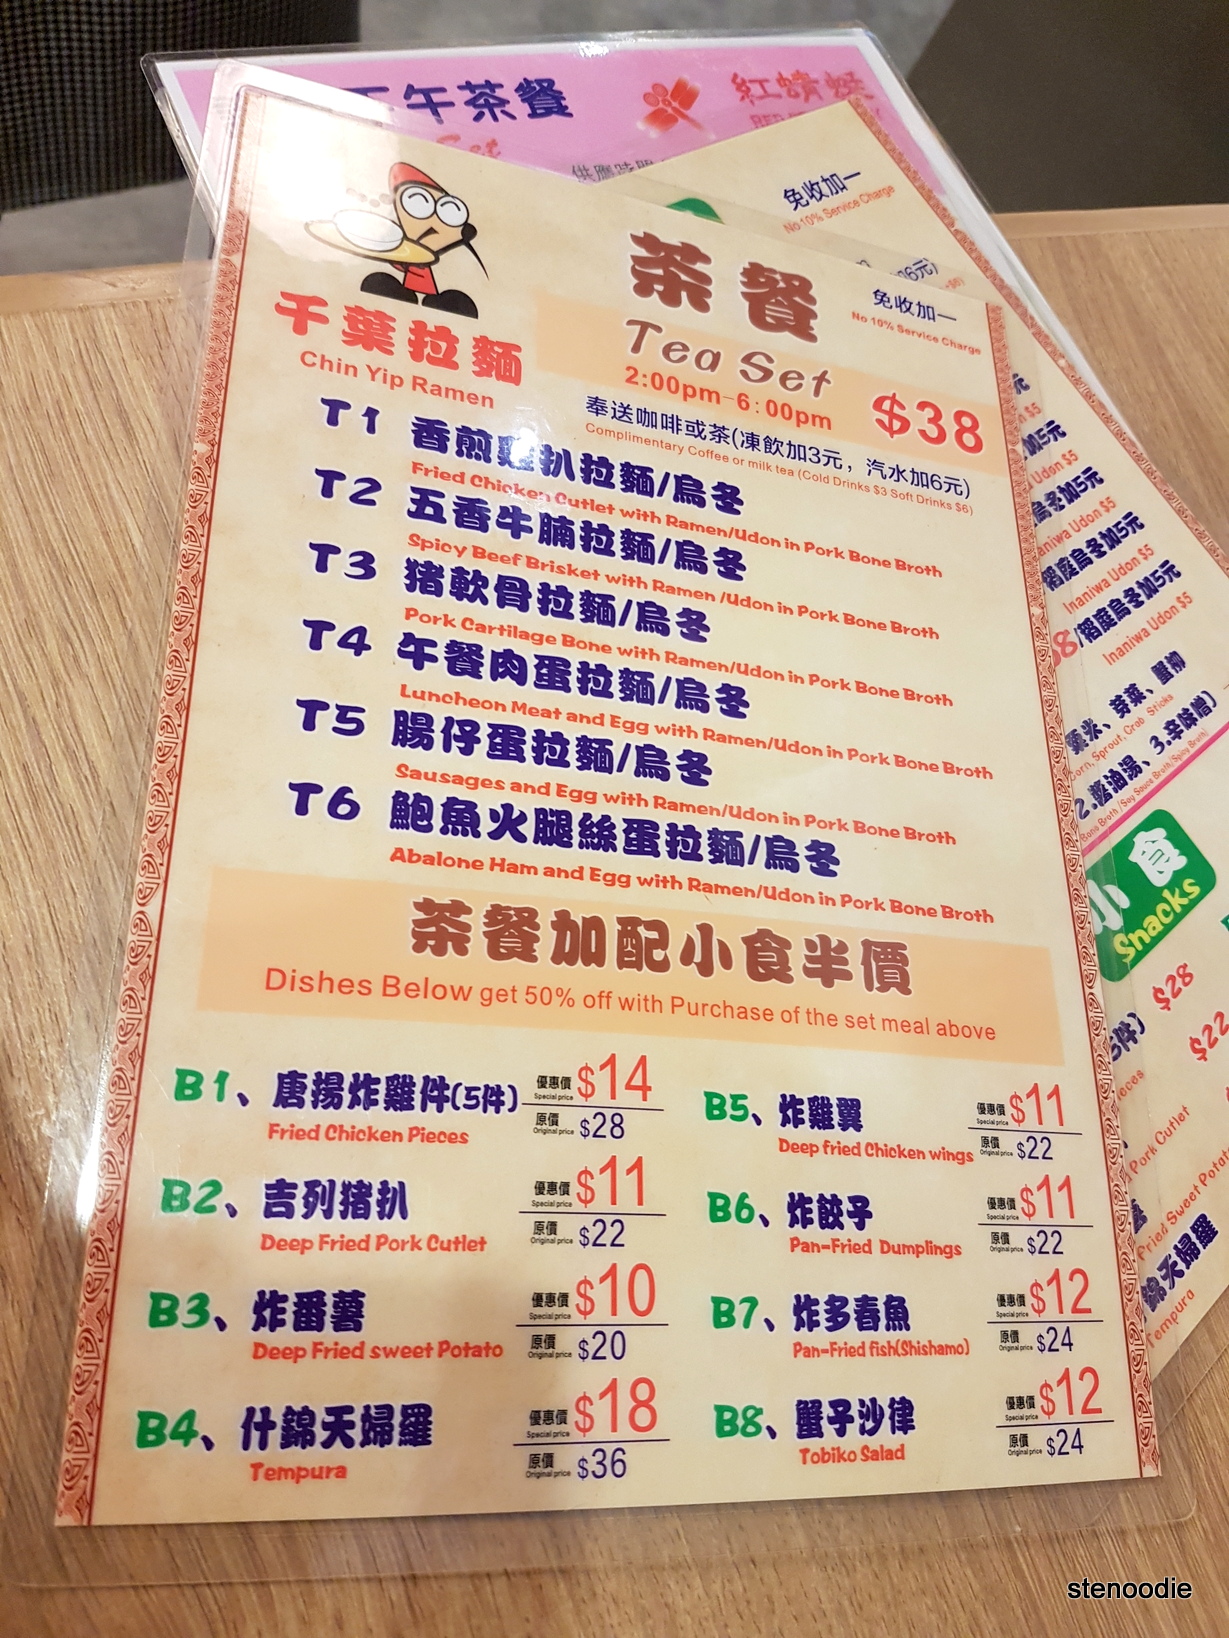 Chin Yip Ramen Tea Set menu